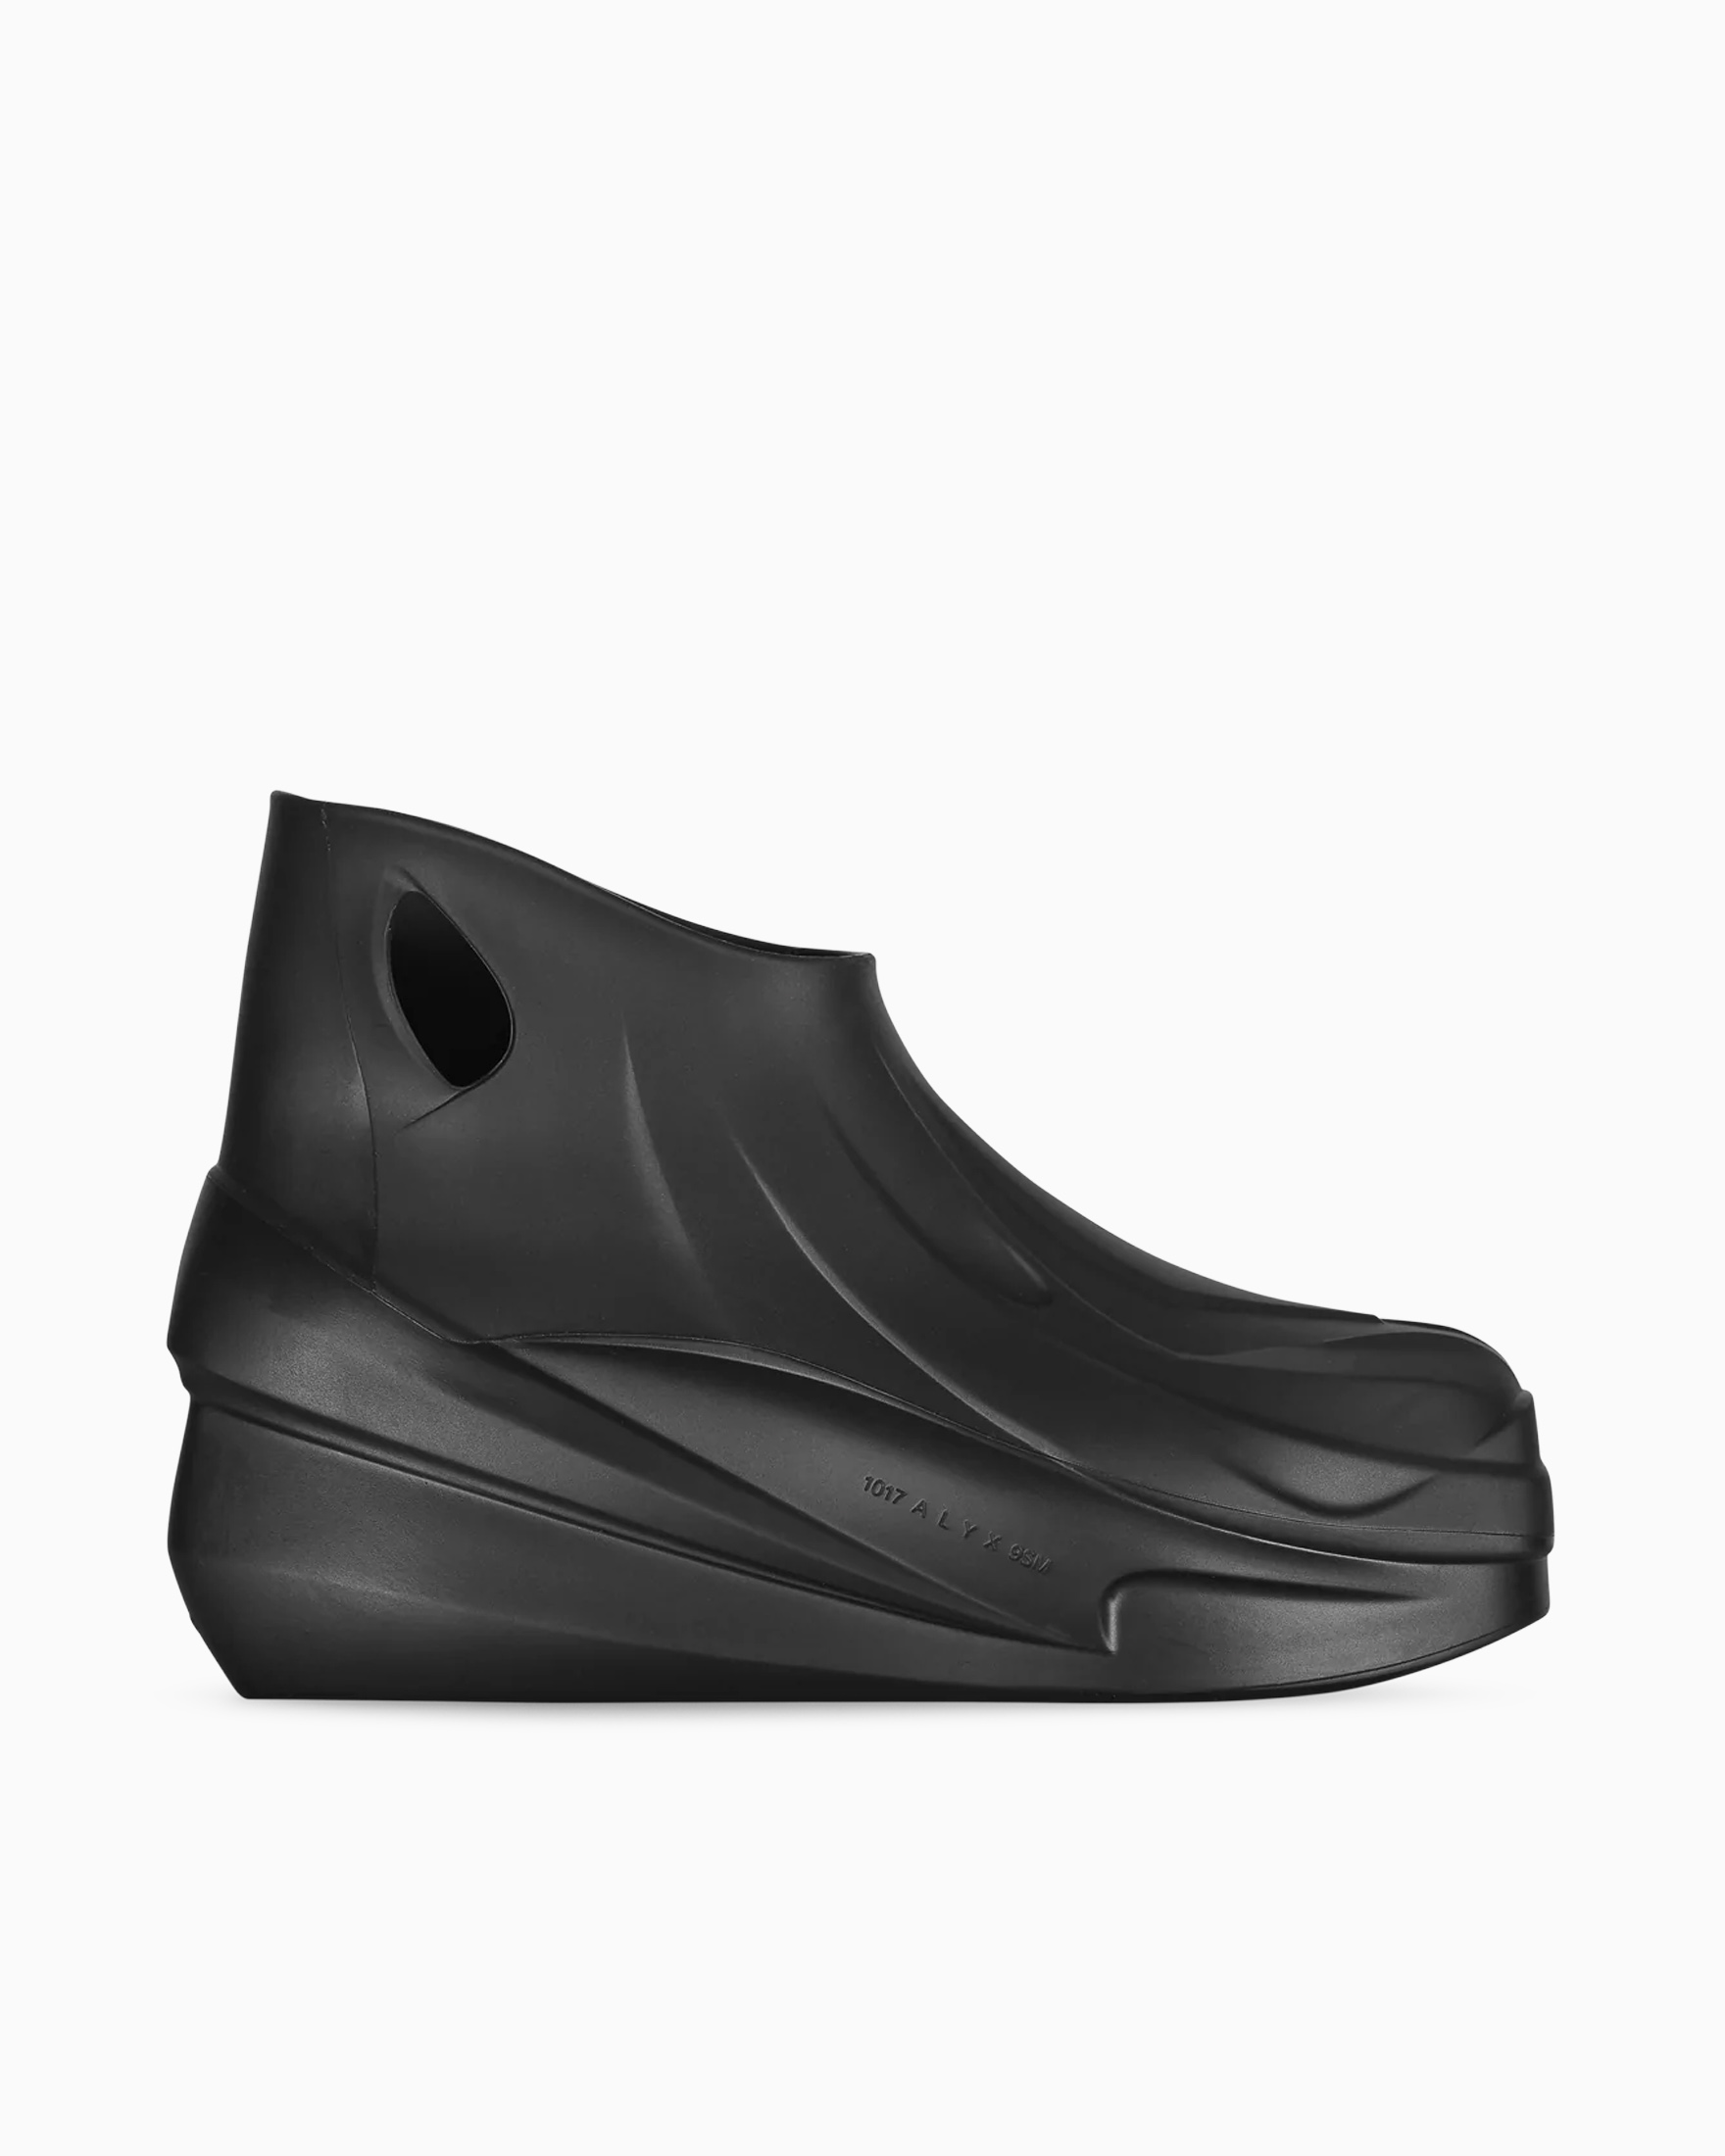 Mono boot $185 1017 ALYX 9SM Footwear Boots Black